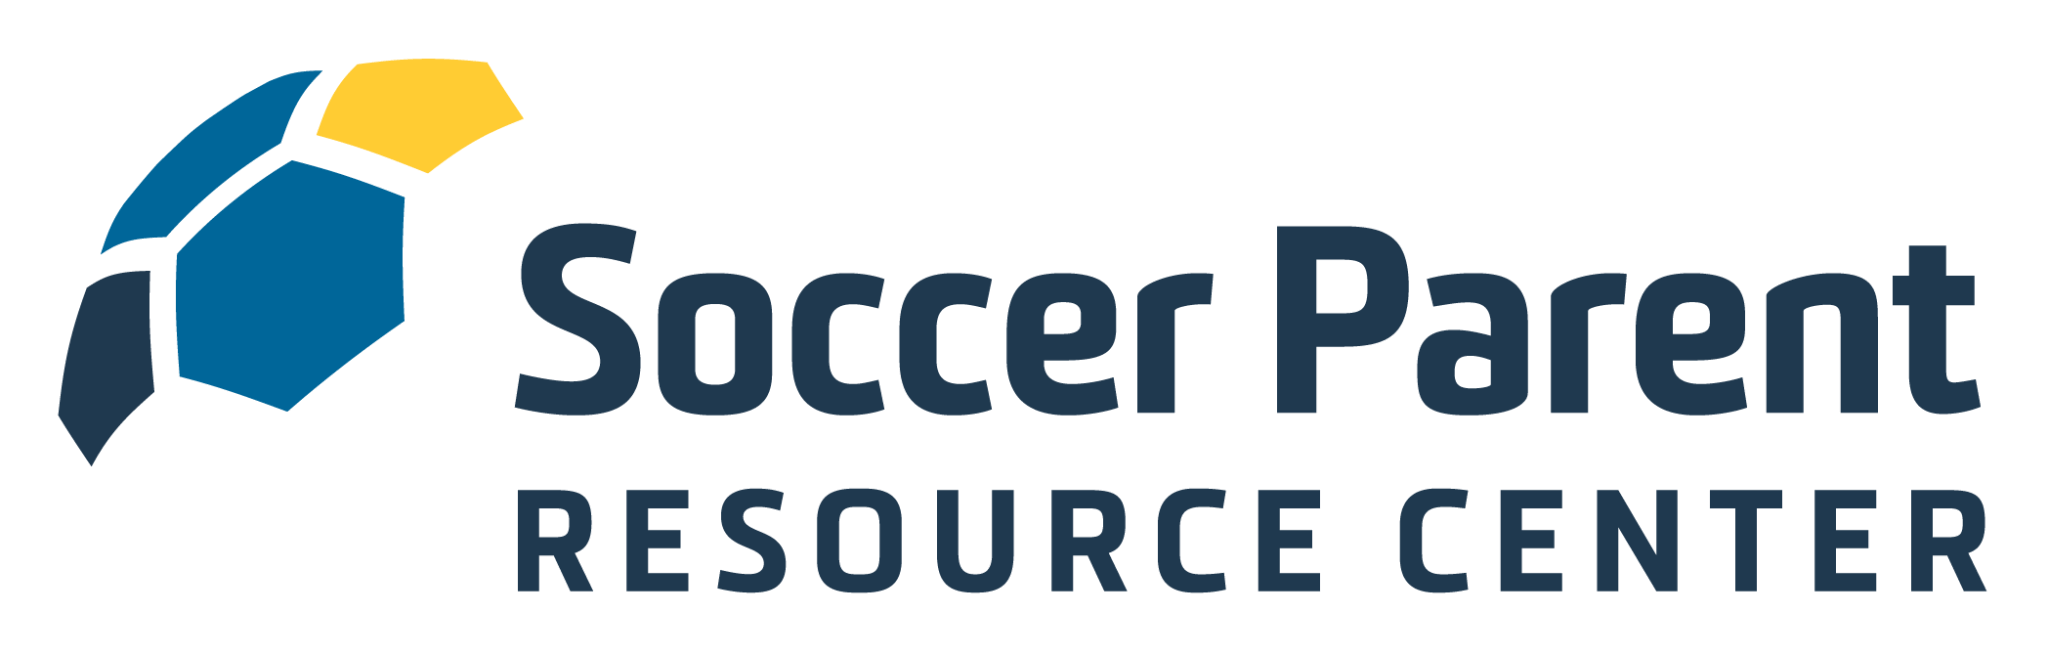 Soccer-Parent-Resource-Center-Logo